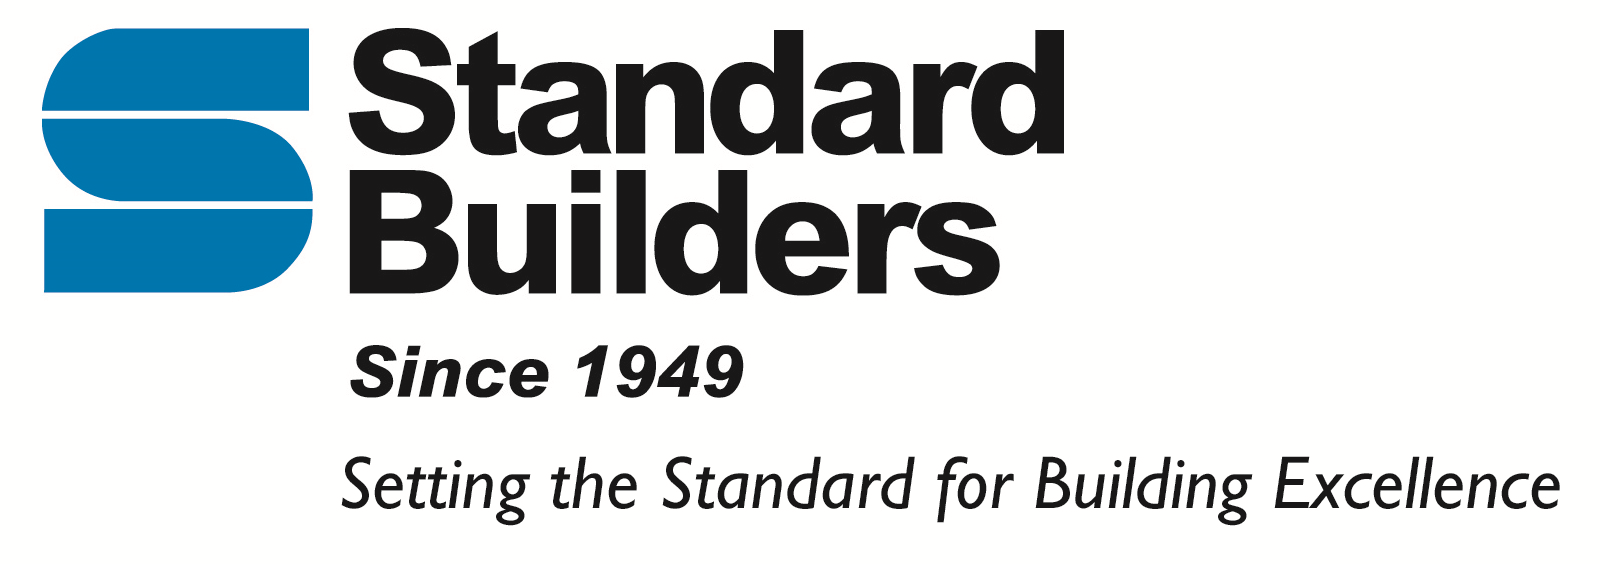 Standard Builders, Inc. Company Logo